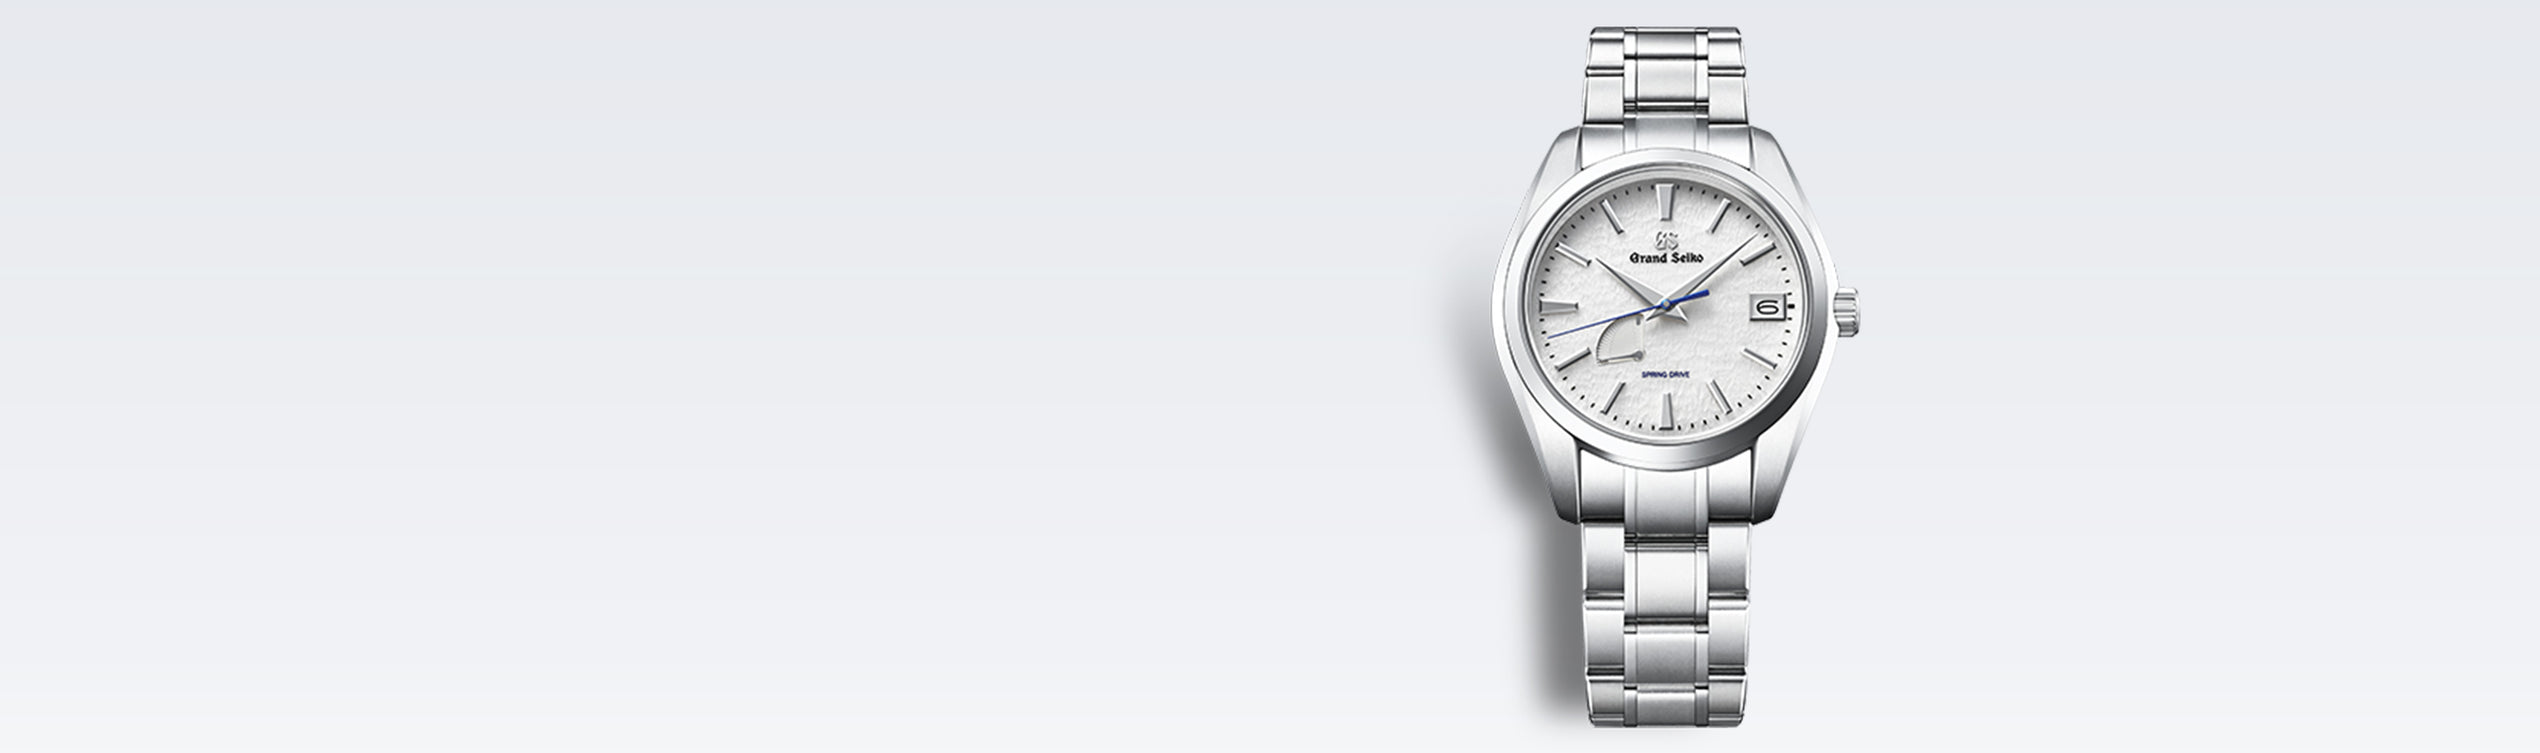 Grand Seiko Watches Australia | Official Grand Seiko Watch Dealer